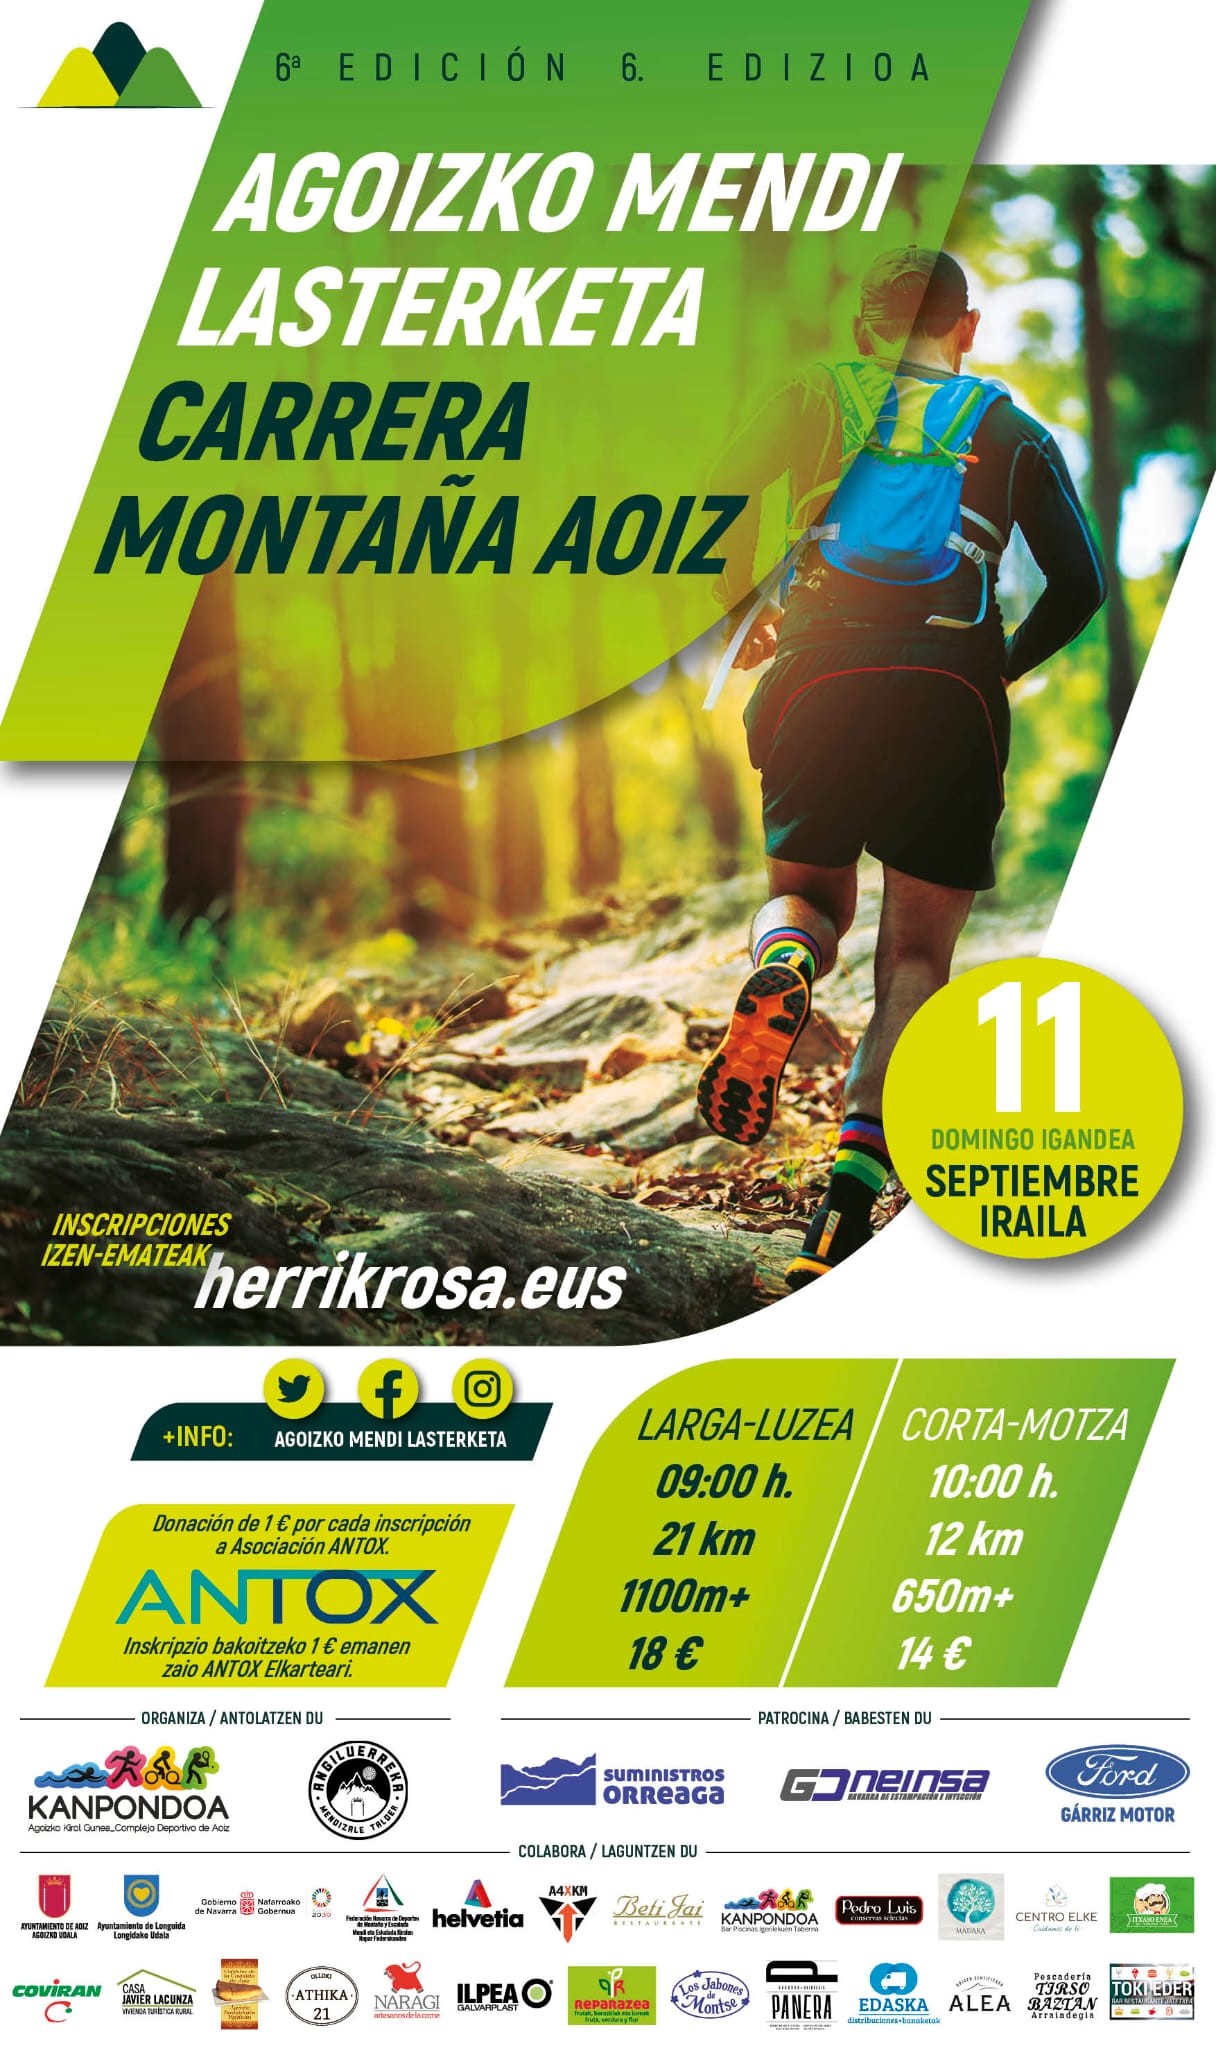 Carrera de Montaña de Aoiz Agoizko Mendi Lasterketa  en colaboración con la Asociación ANTOX